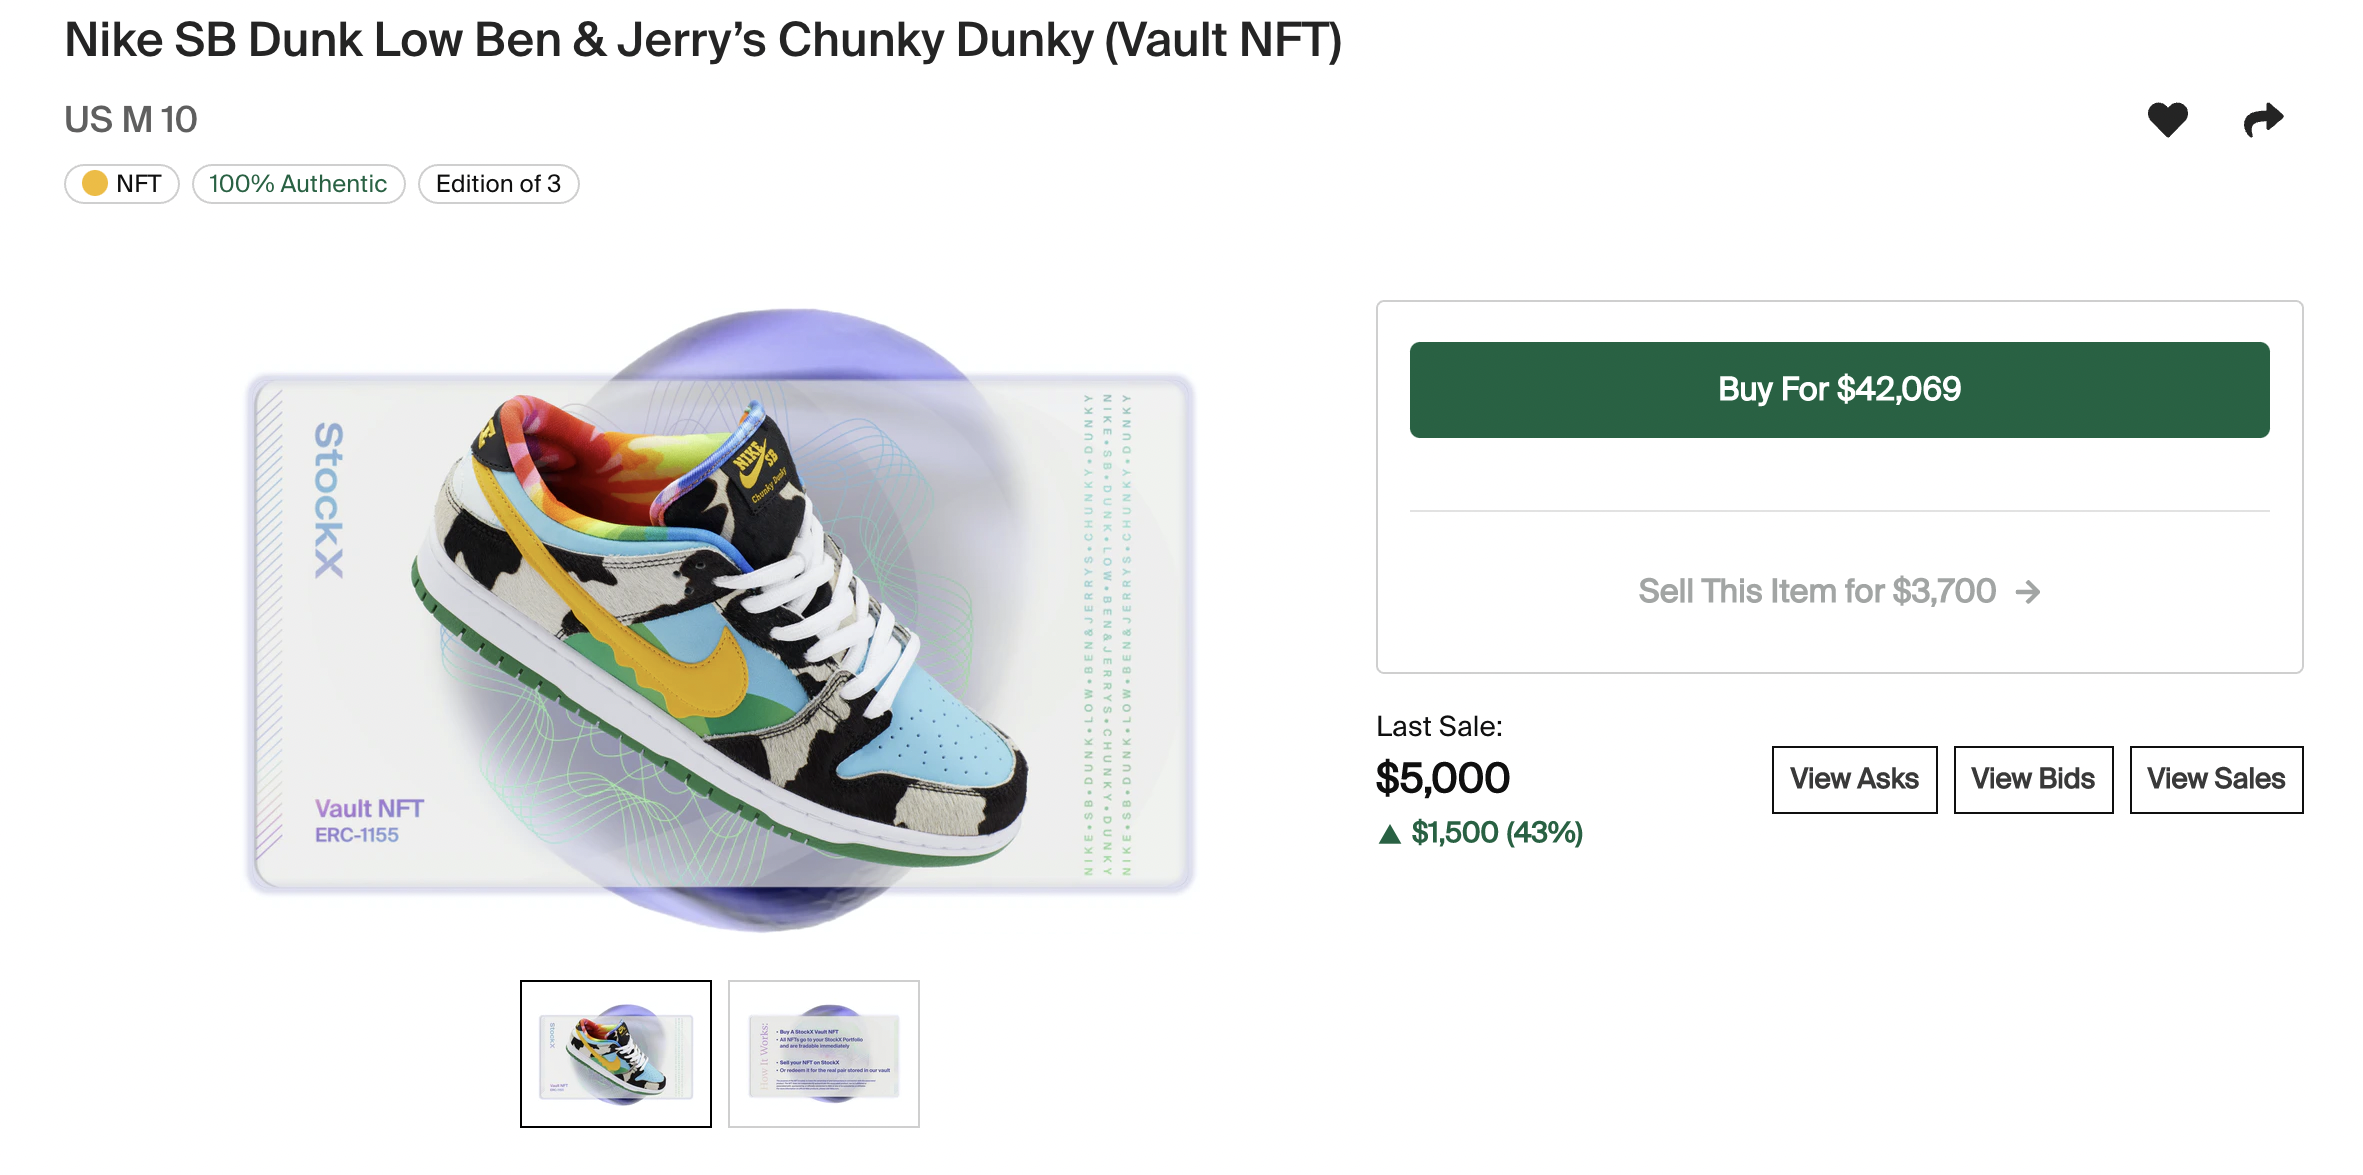 StockX Vault NFT Ben &amp; Jerry&#x27;s x Nike SB Dunk Low Chunky Dunky